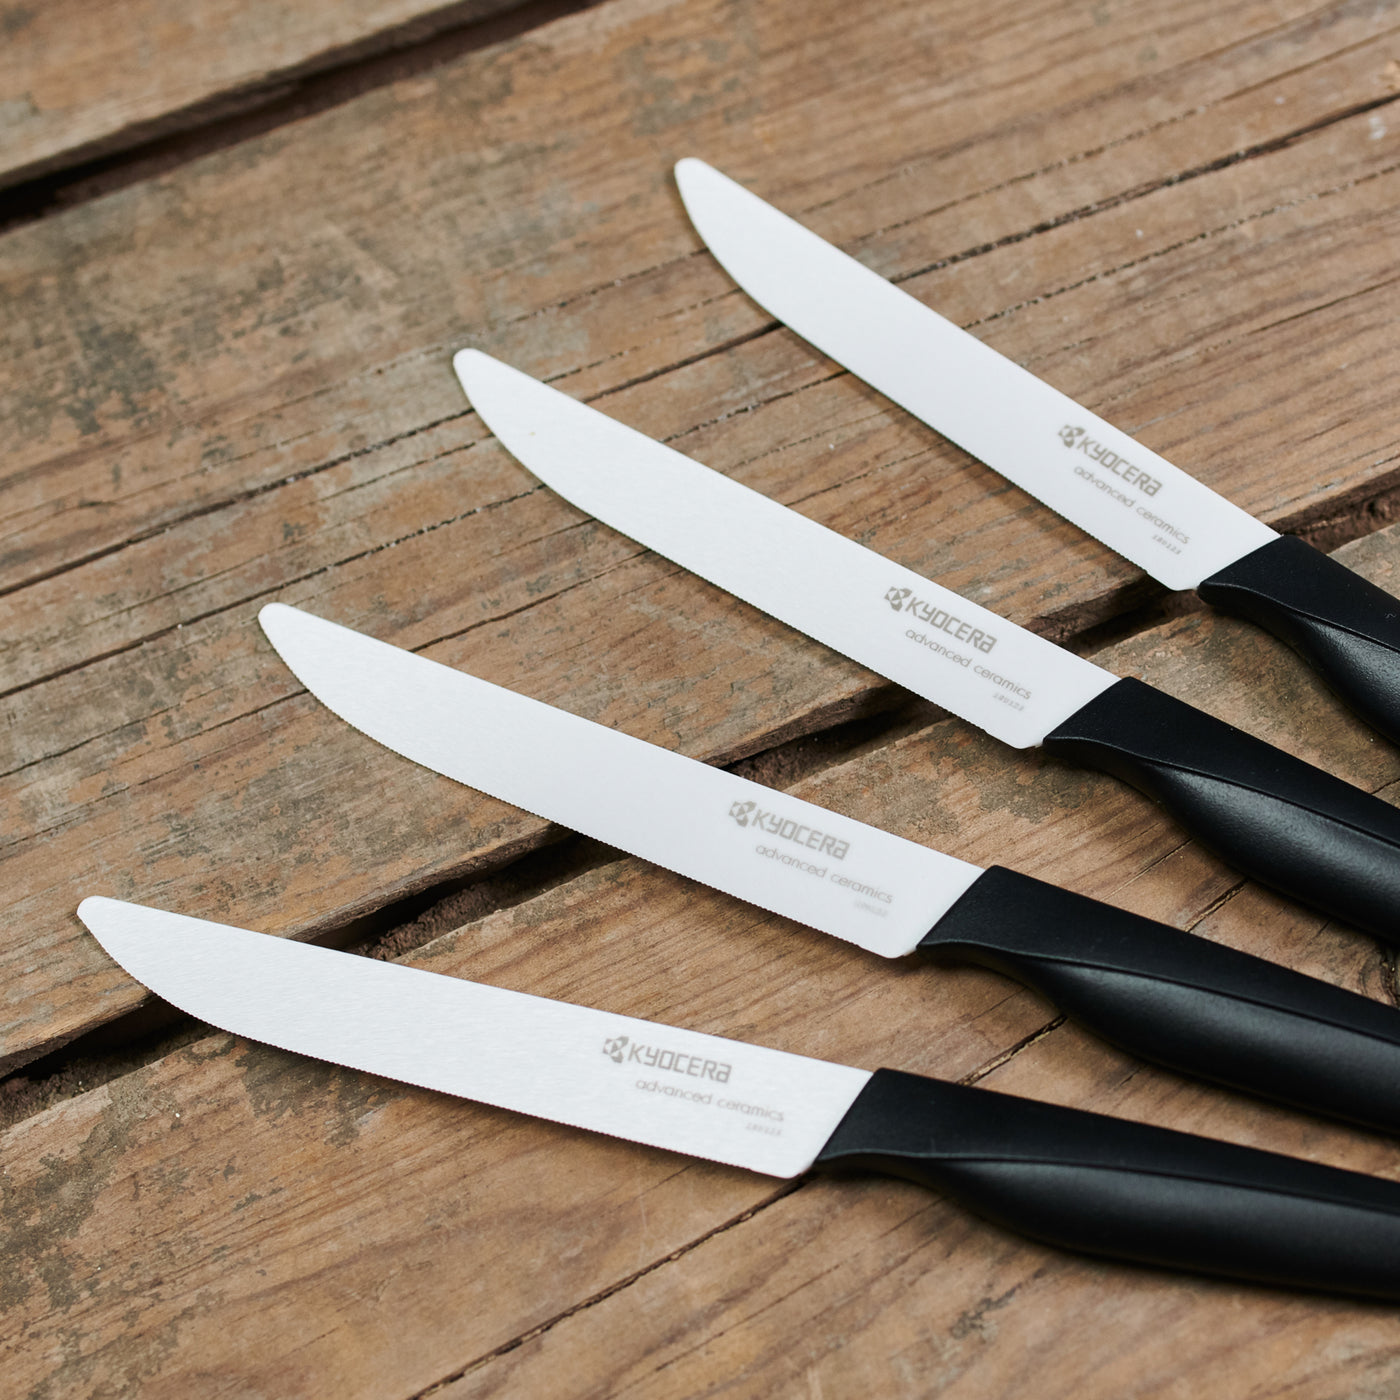 Kyocera Revolution 2-Piece Ceramic Knife Set